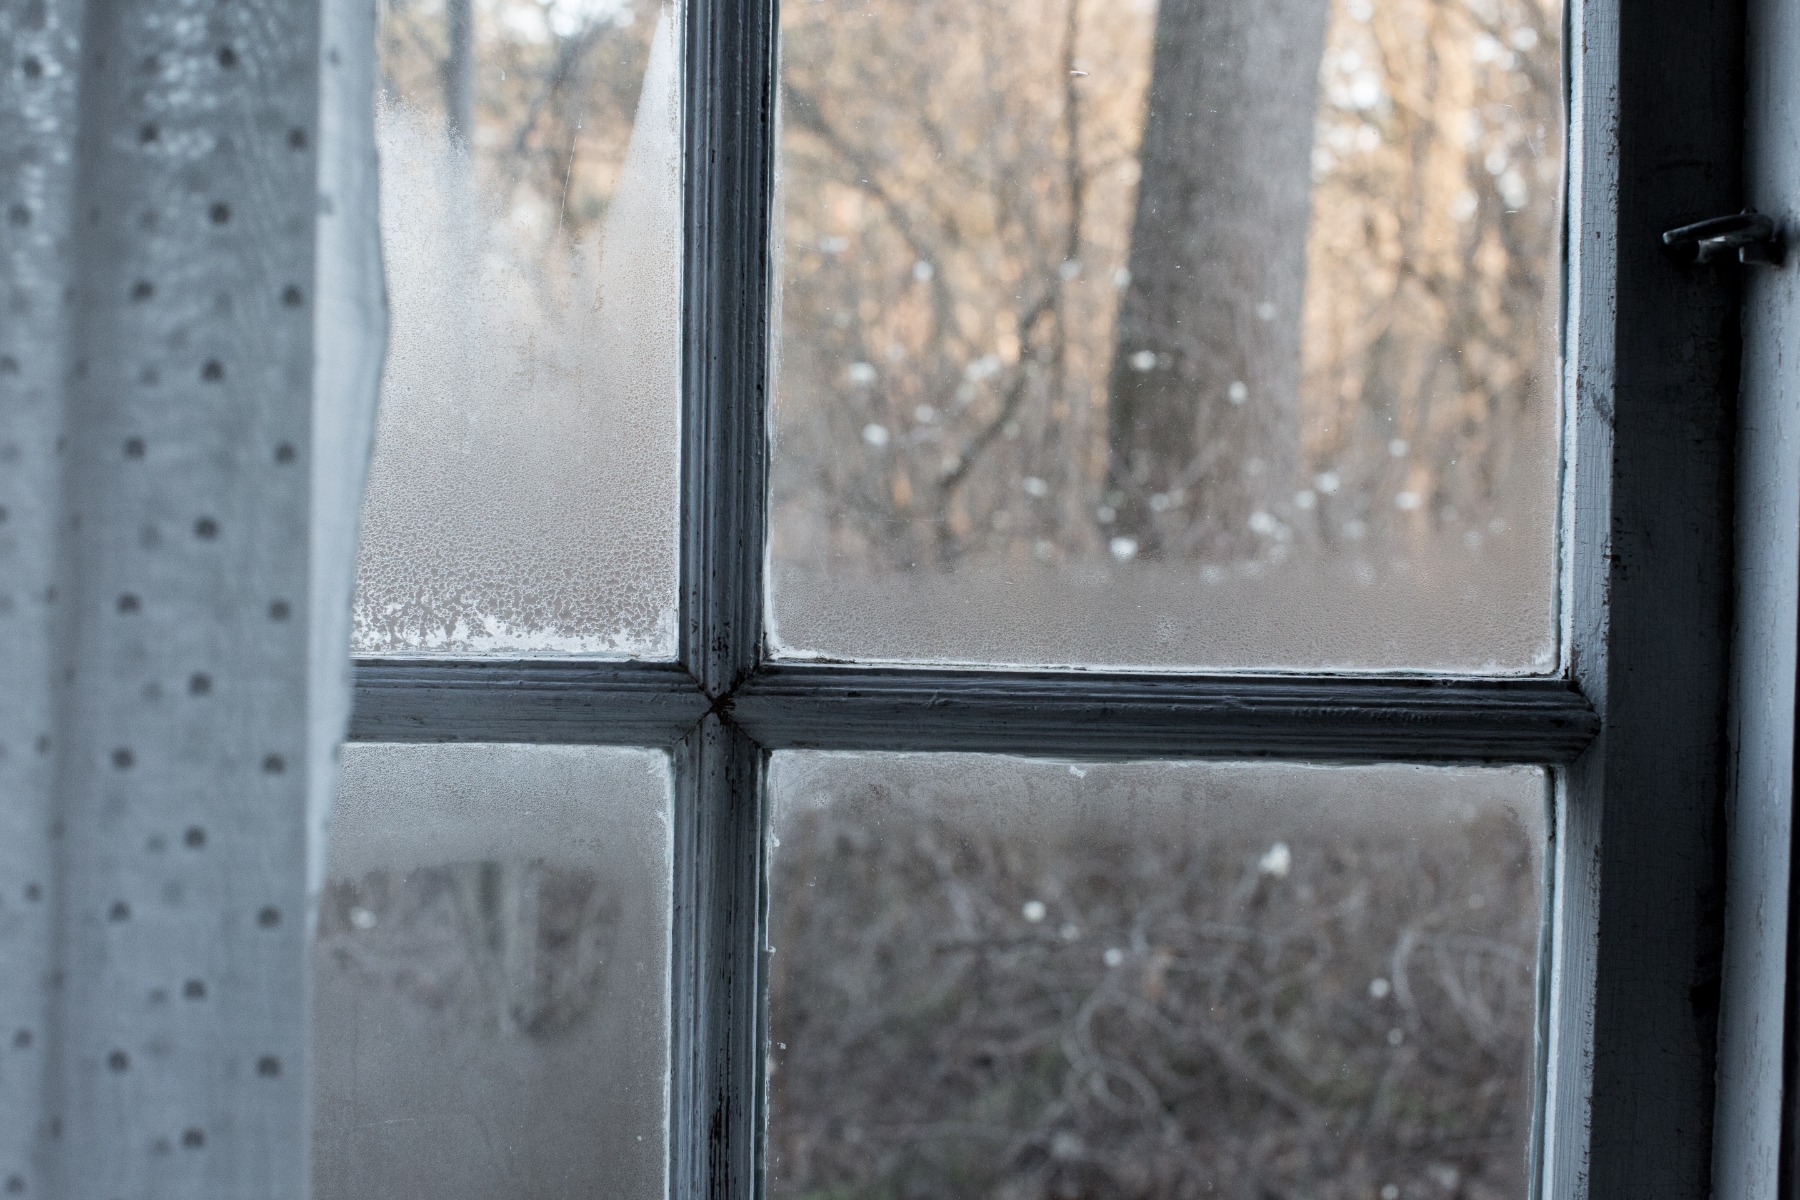 Condensation on the windows